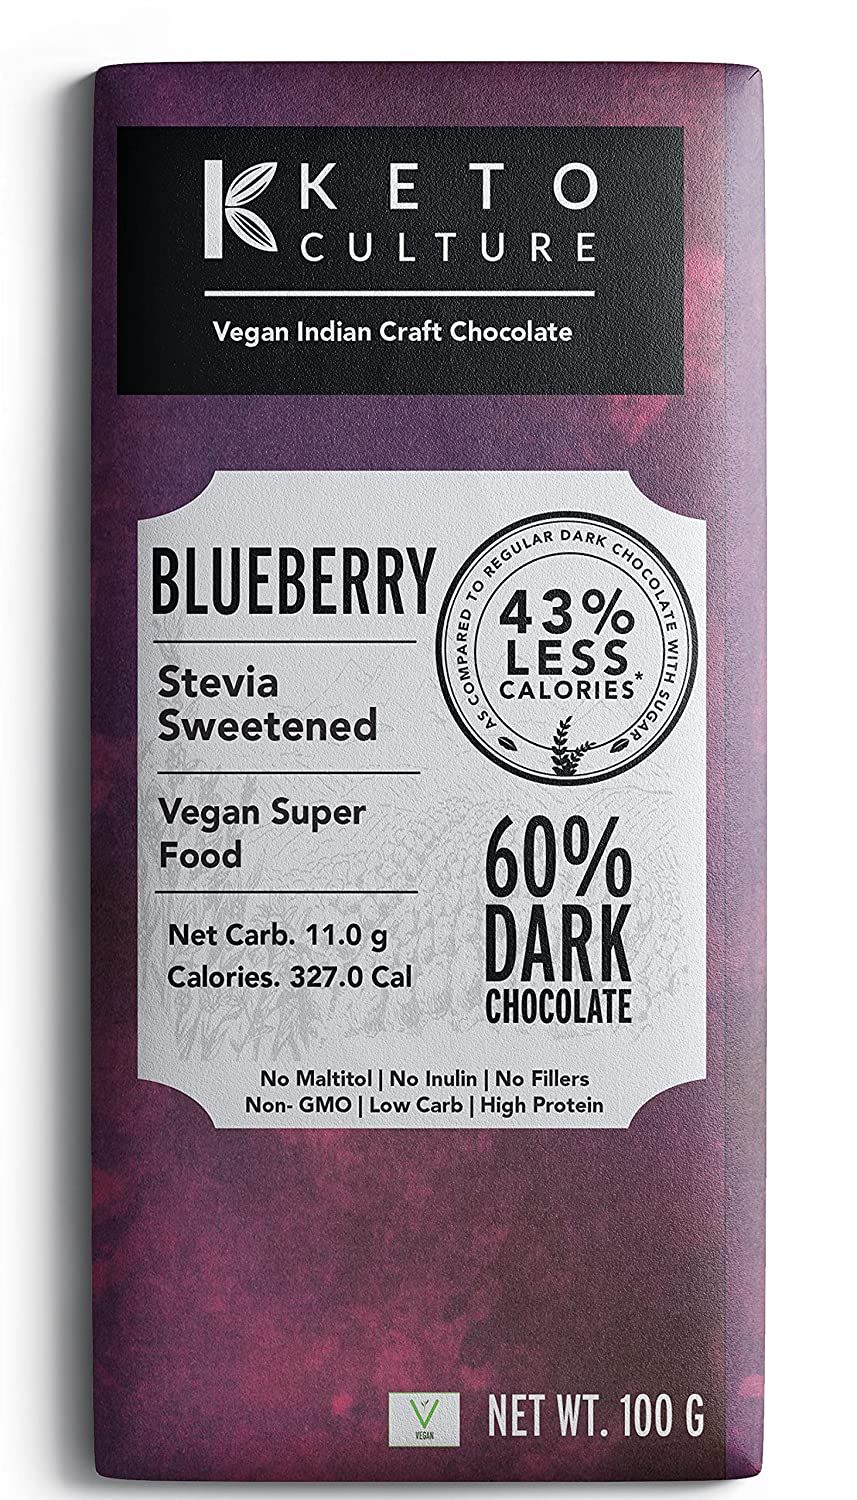 Keto Culture Blueberry Vegan Dark Chocolate Image